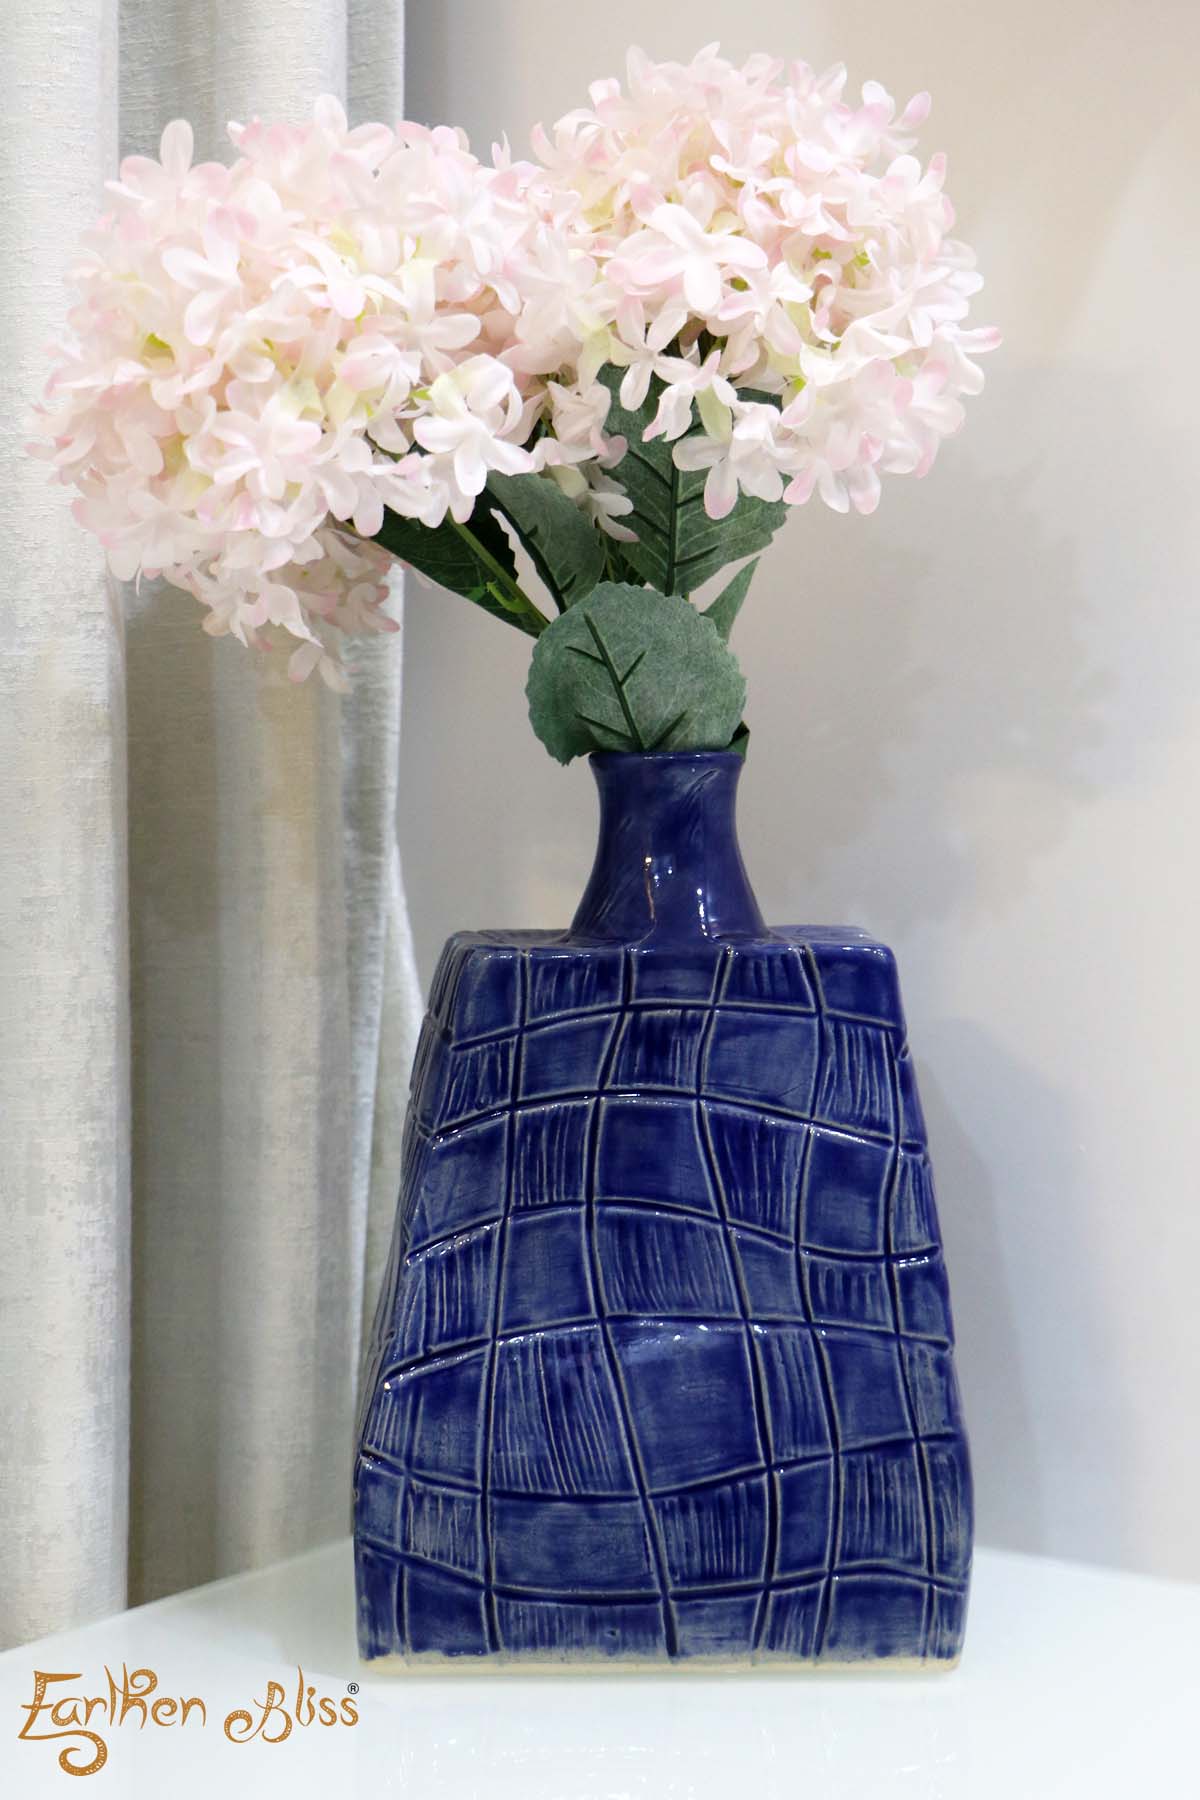 Bright Blue vase